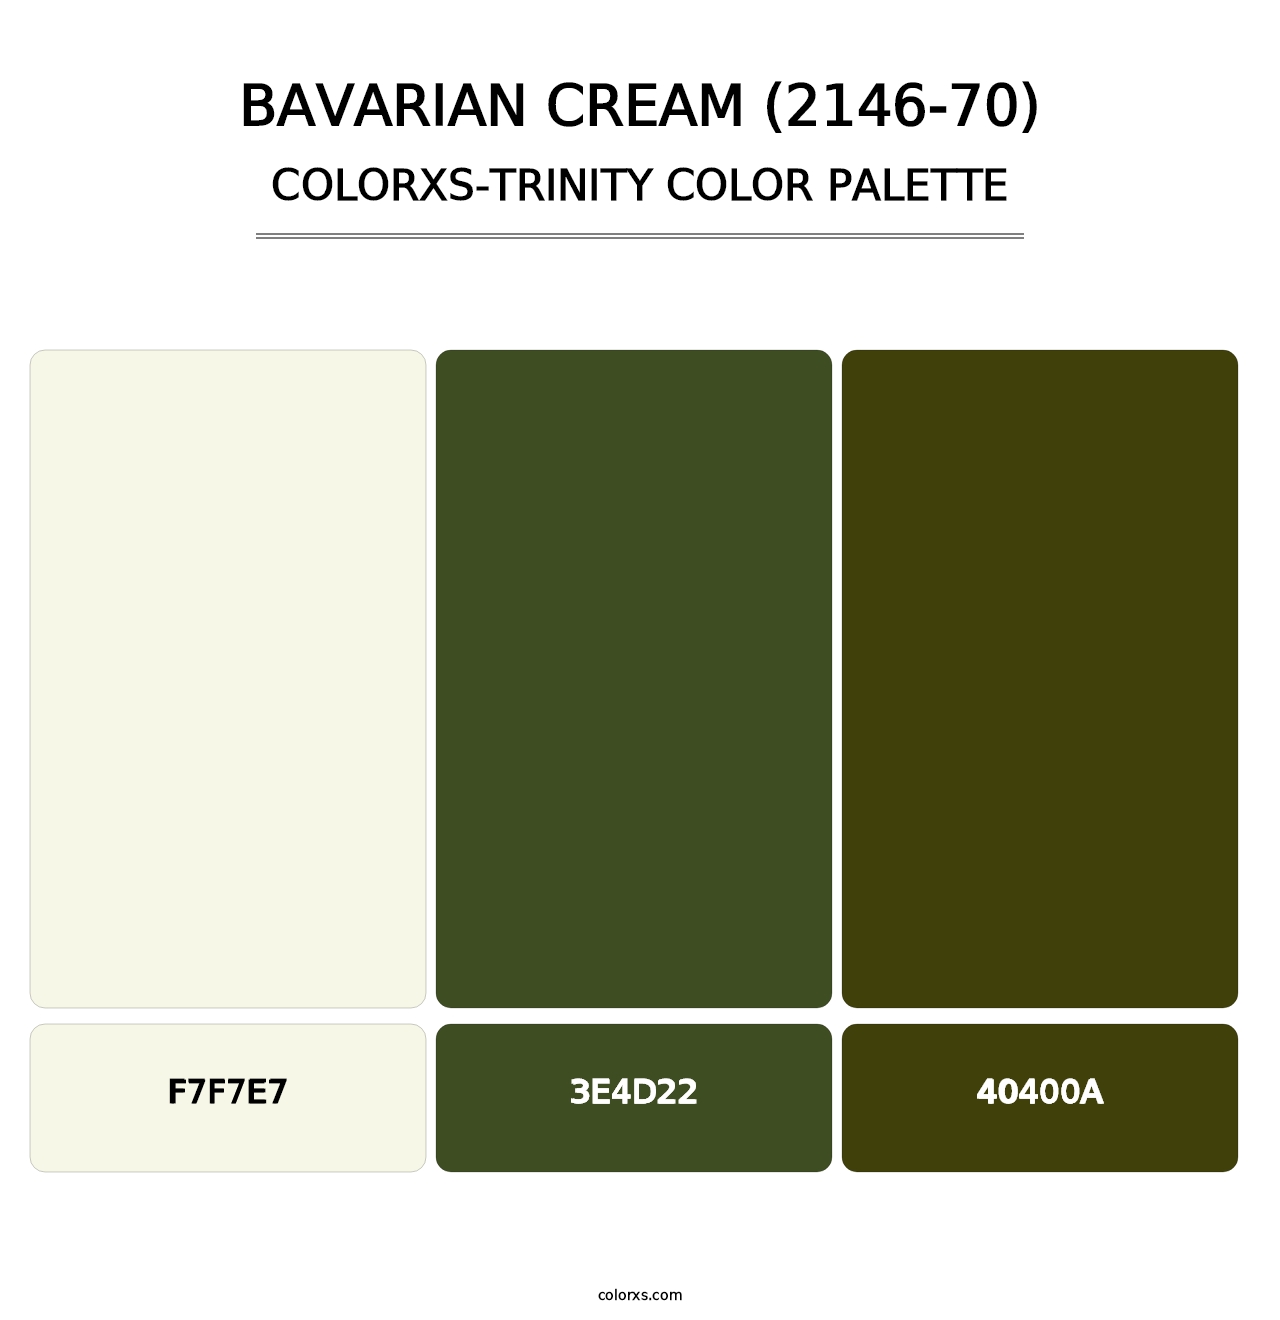 Bavarian Cream (2146-70) - Colorxs Trinity Palette